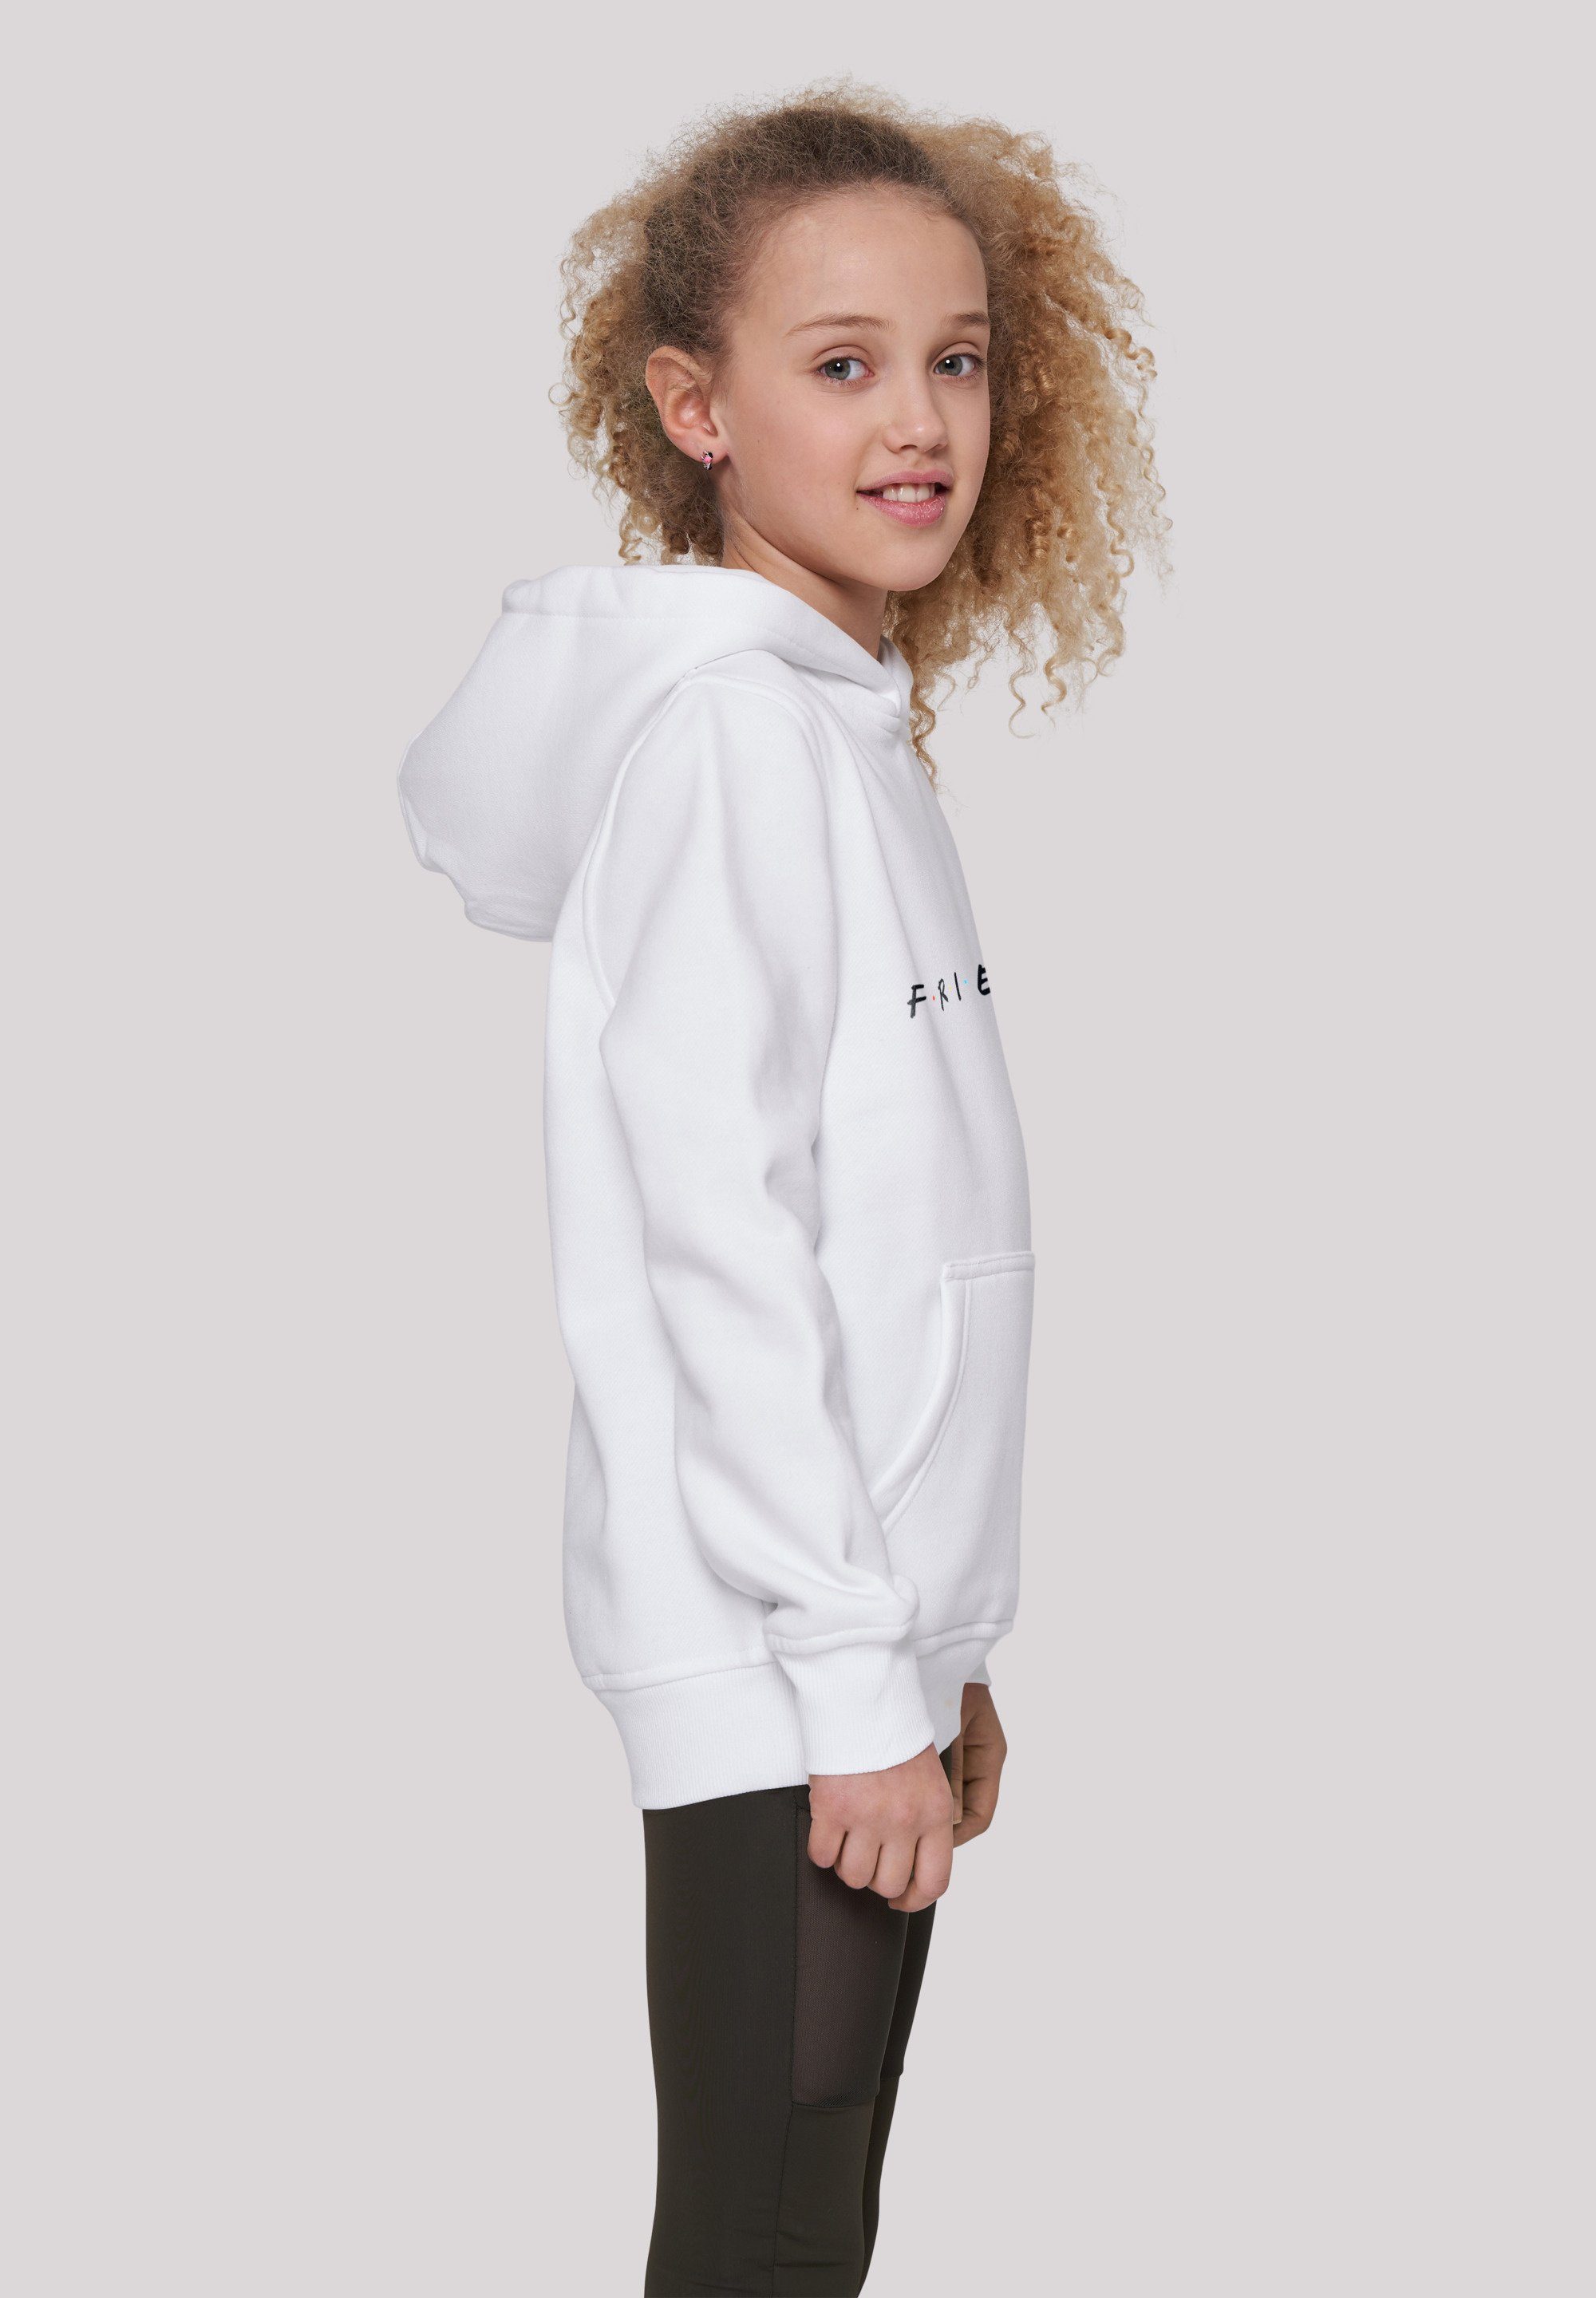 F4NT4STIC Sweatshirt FRIENDS TV Serie Unisex Kinder,Premium Logo WHT Merch,Jungen,Mädchen,Bedruckt Text